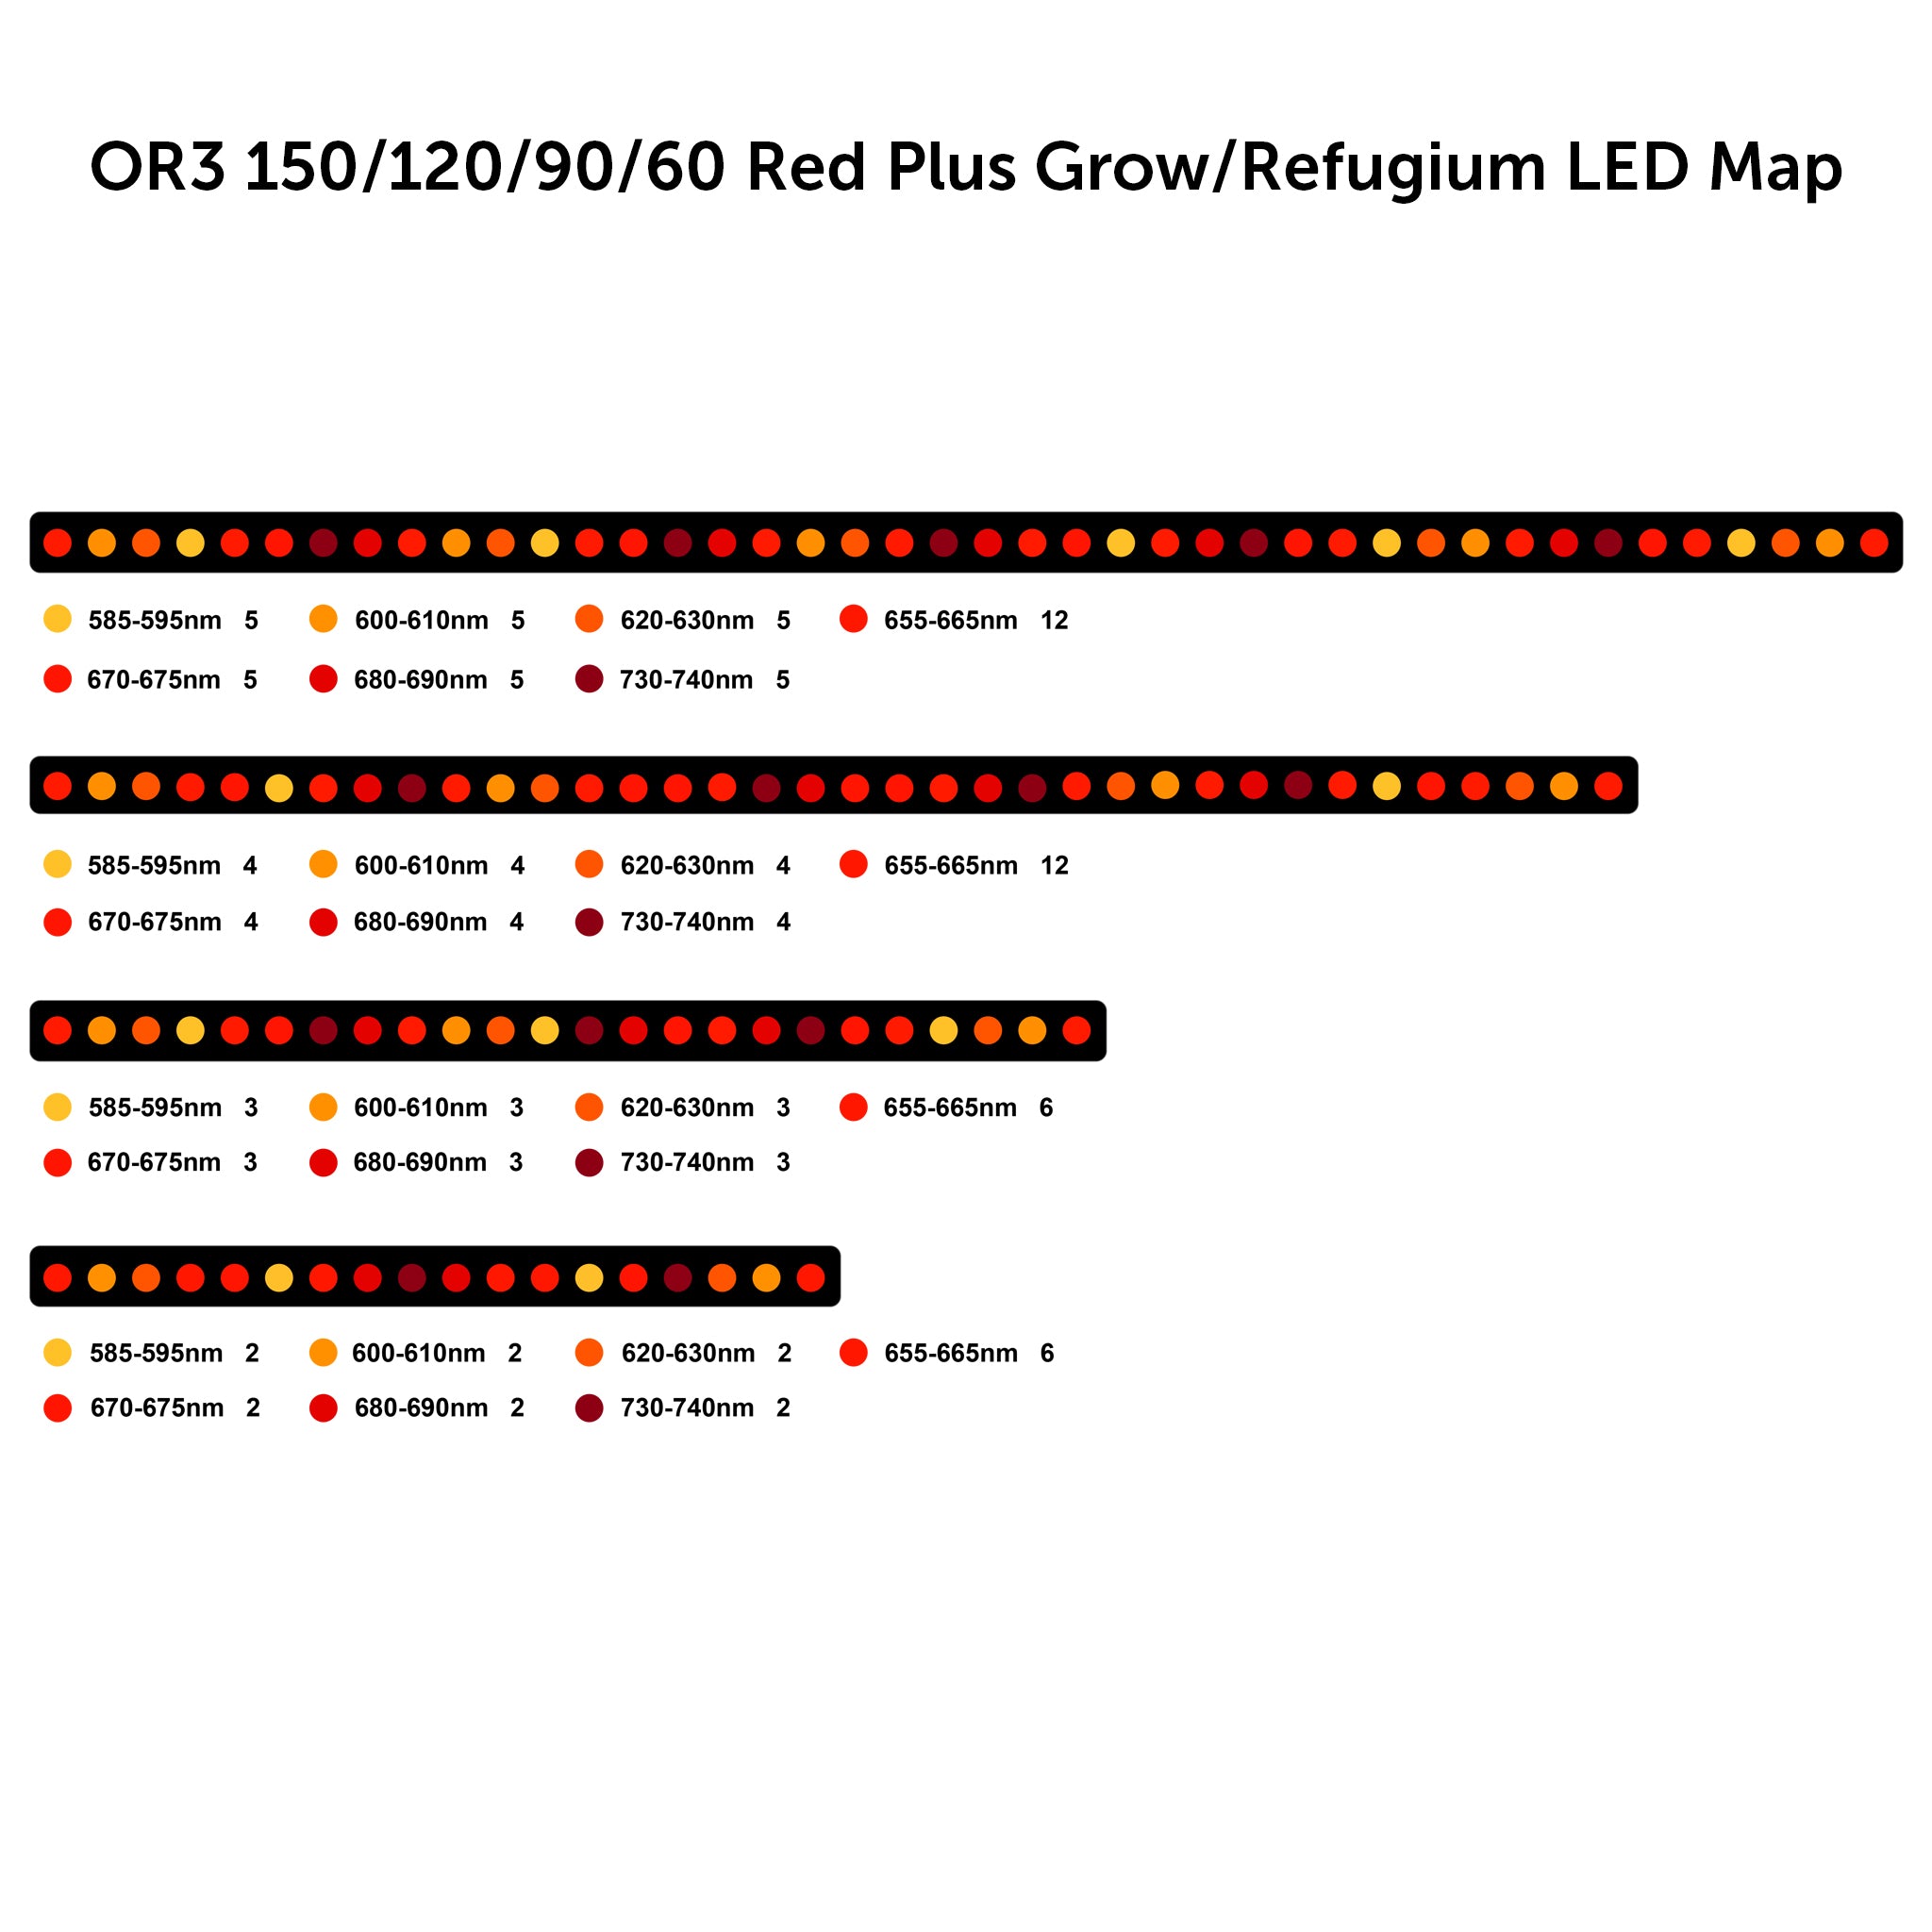 OR3 Red Plus - Grow / Refugium LED Bar